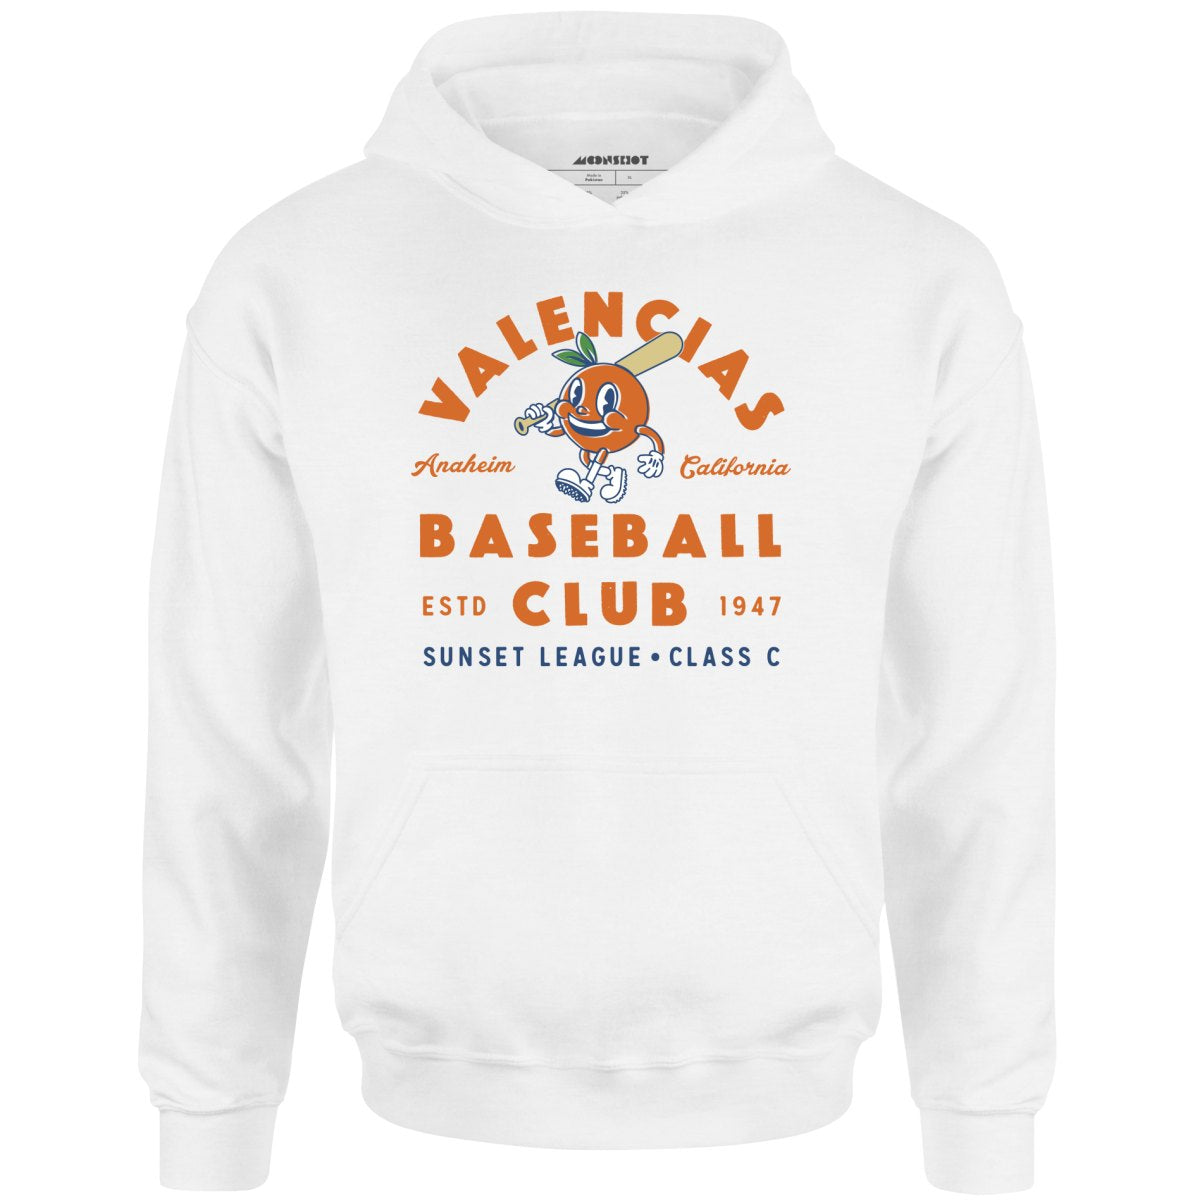 Anaheim Valencias - California - Vintage Defunct Baseball Teams - Unisex Hoodie